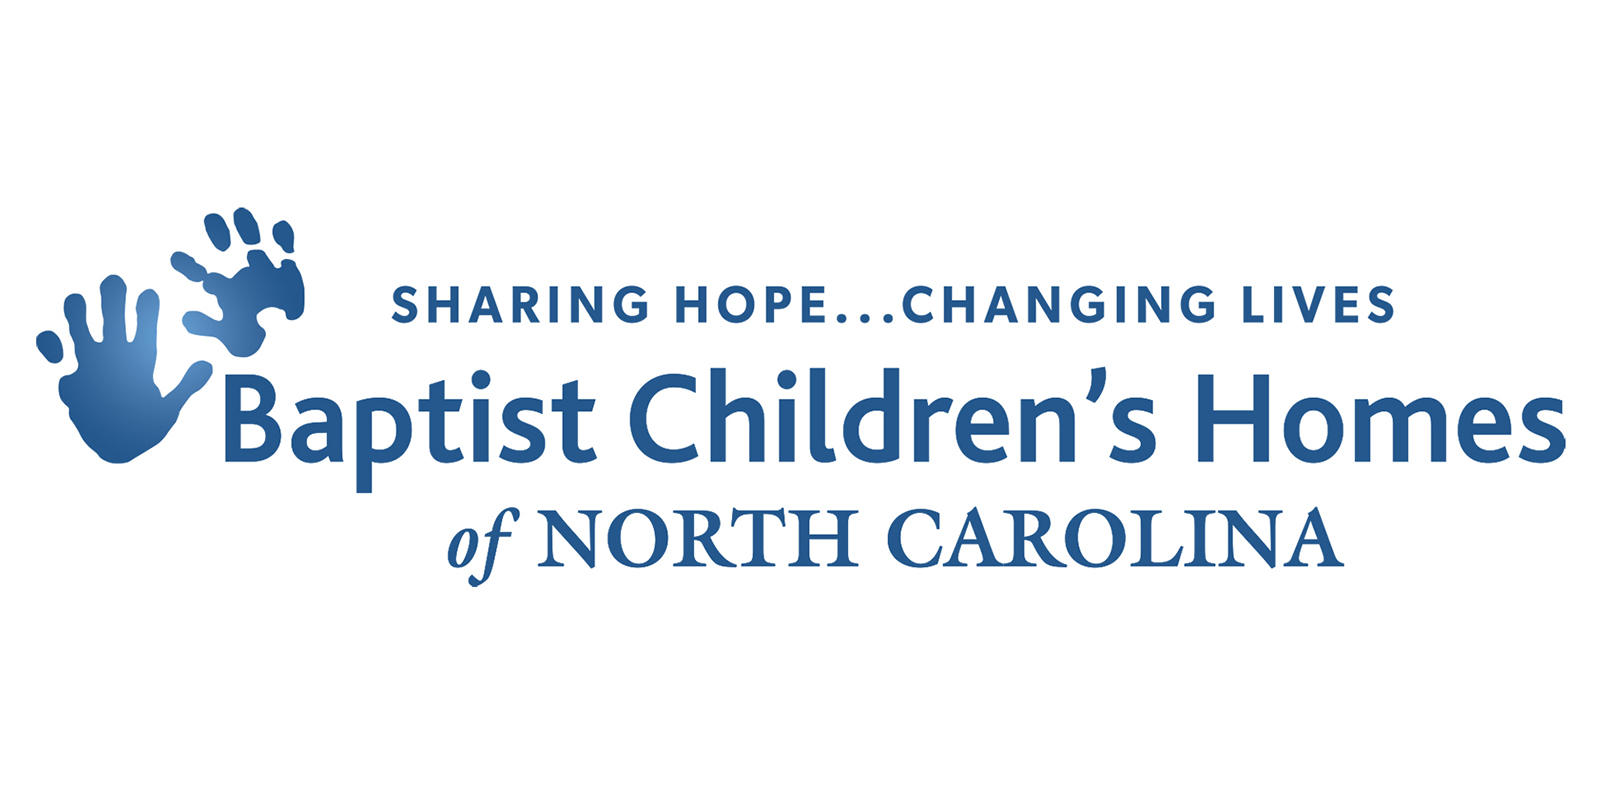 Baptist Children’s Homes of North Carolina logo. Courtesy image